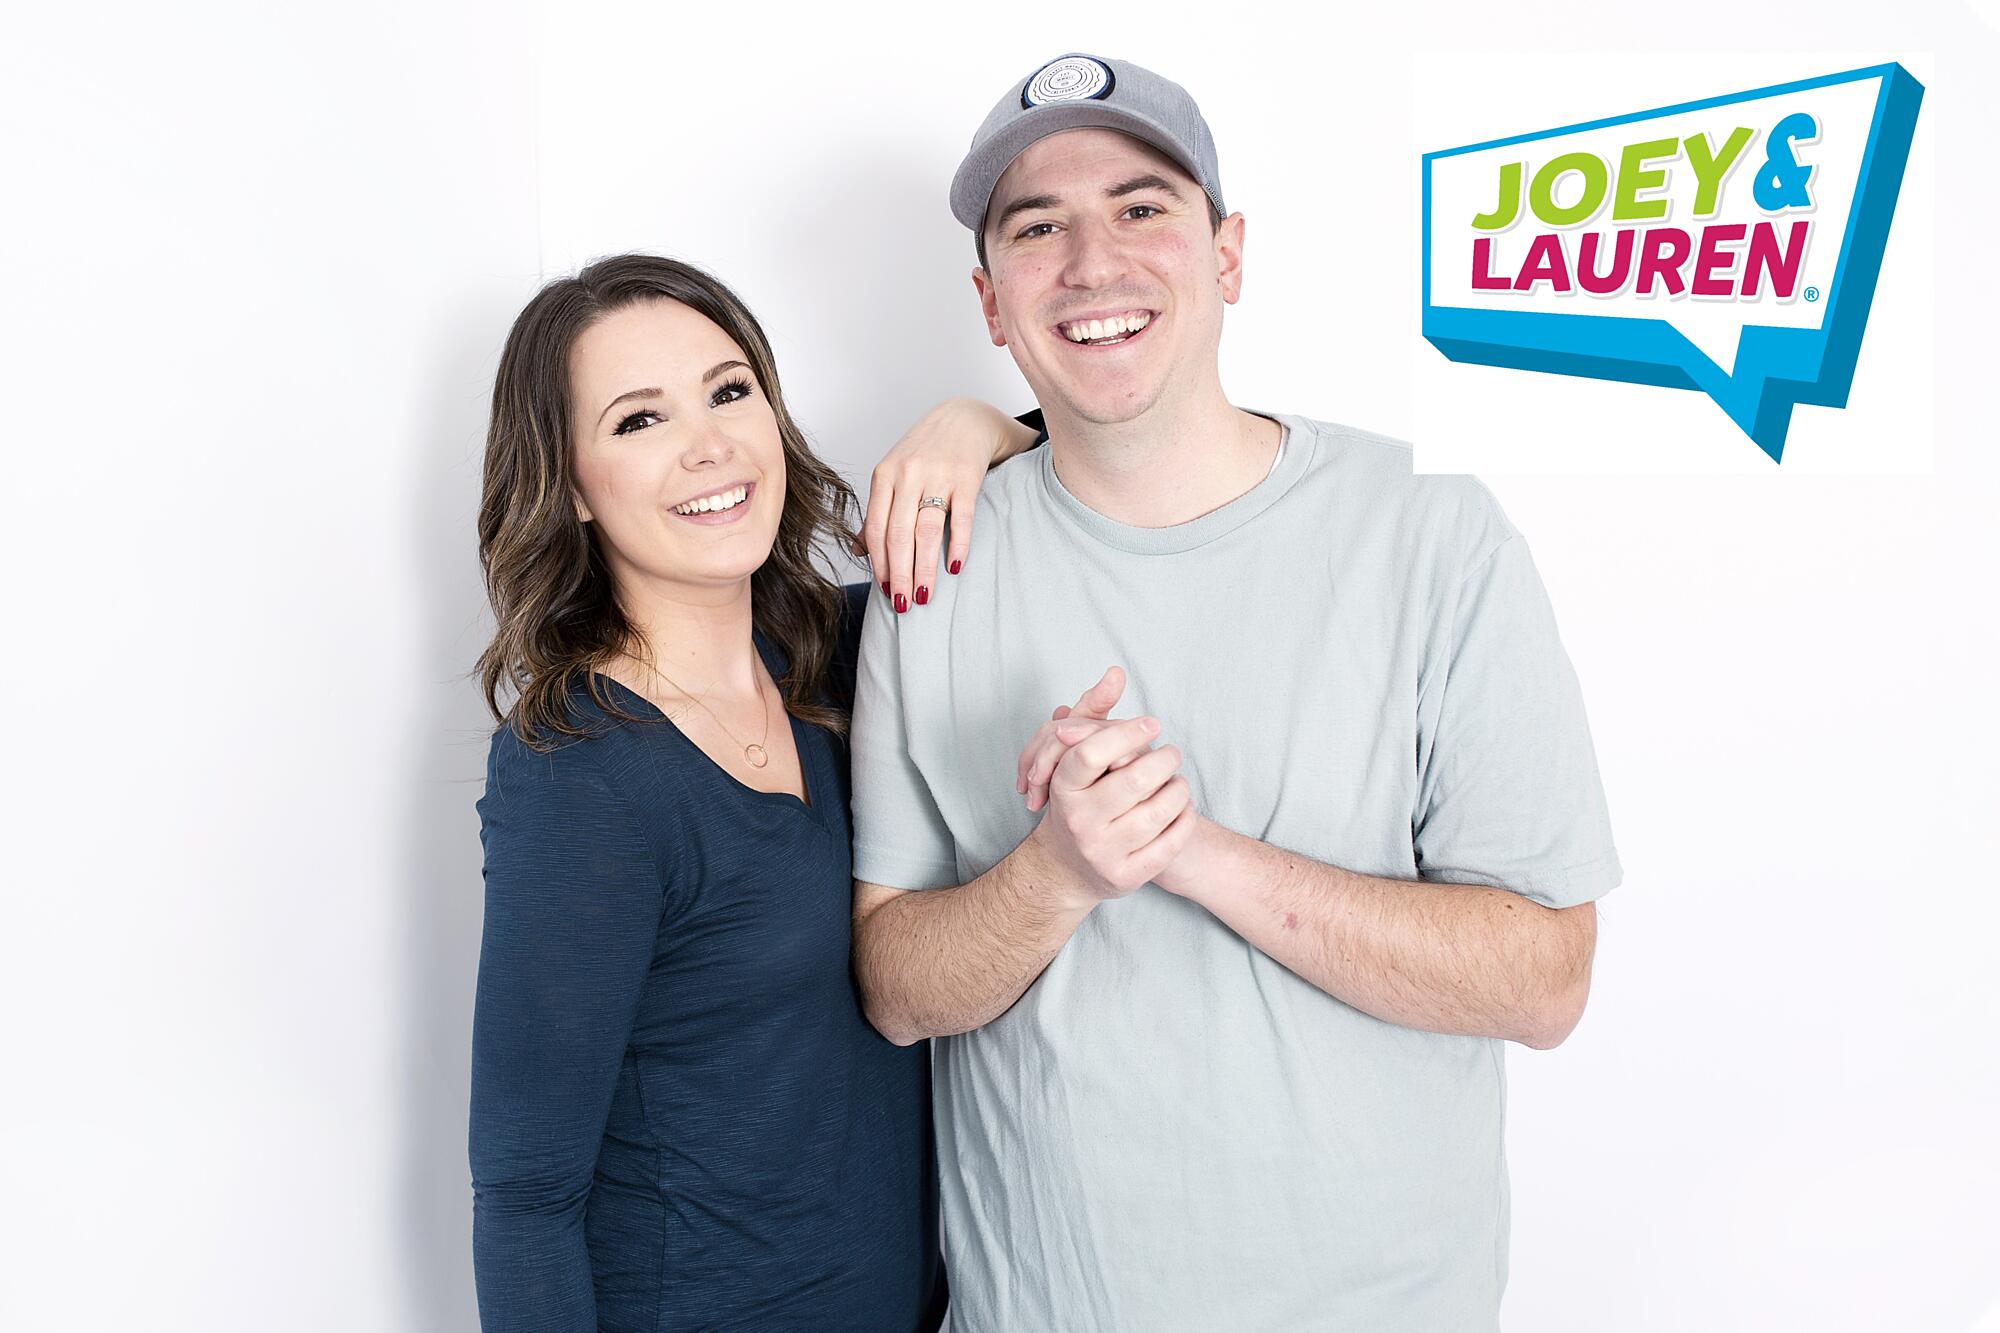 KZMG (My 102.7 FM)/Boise Morning Stars Joey & Lauren Head Into Syndication